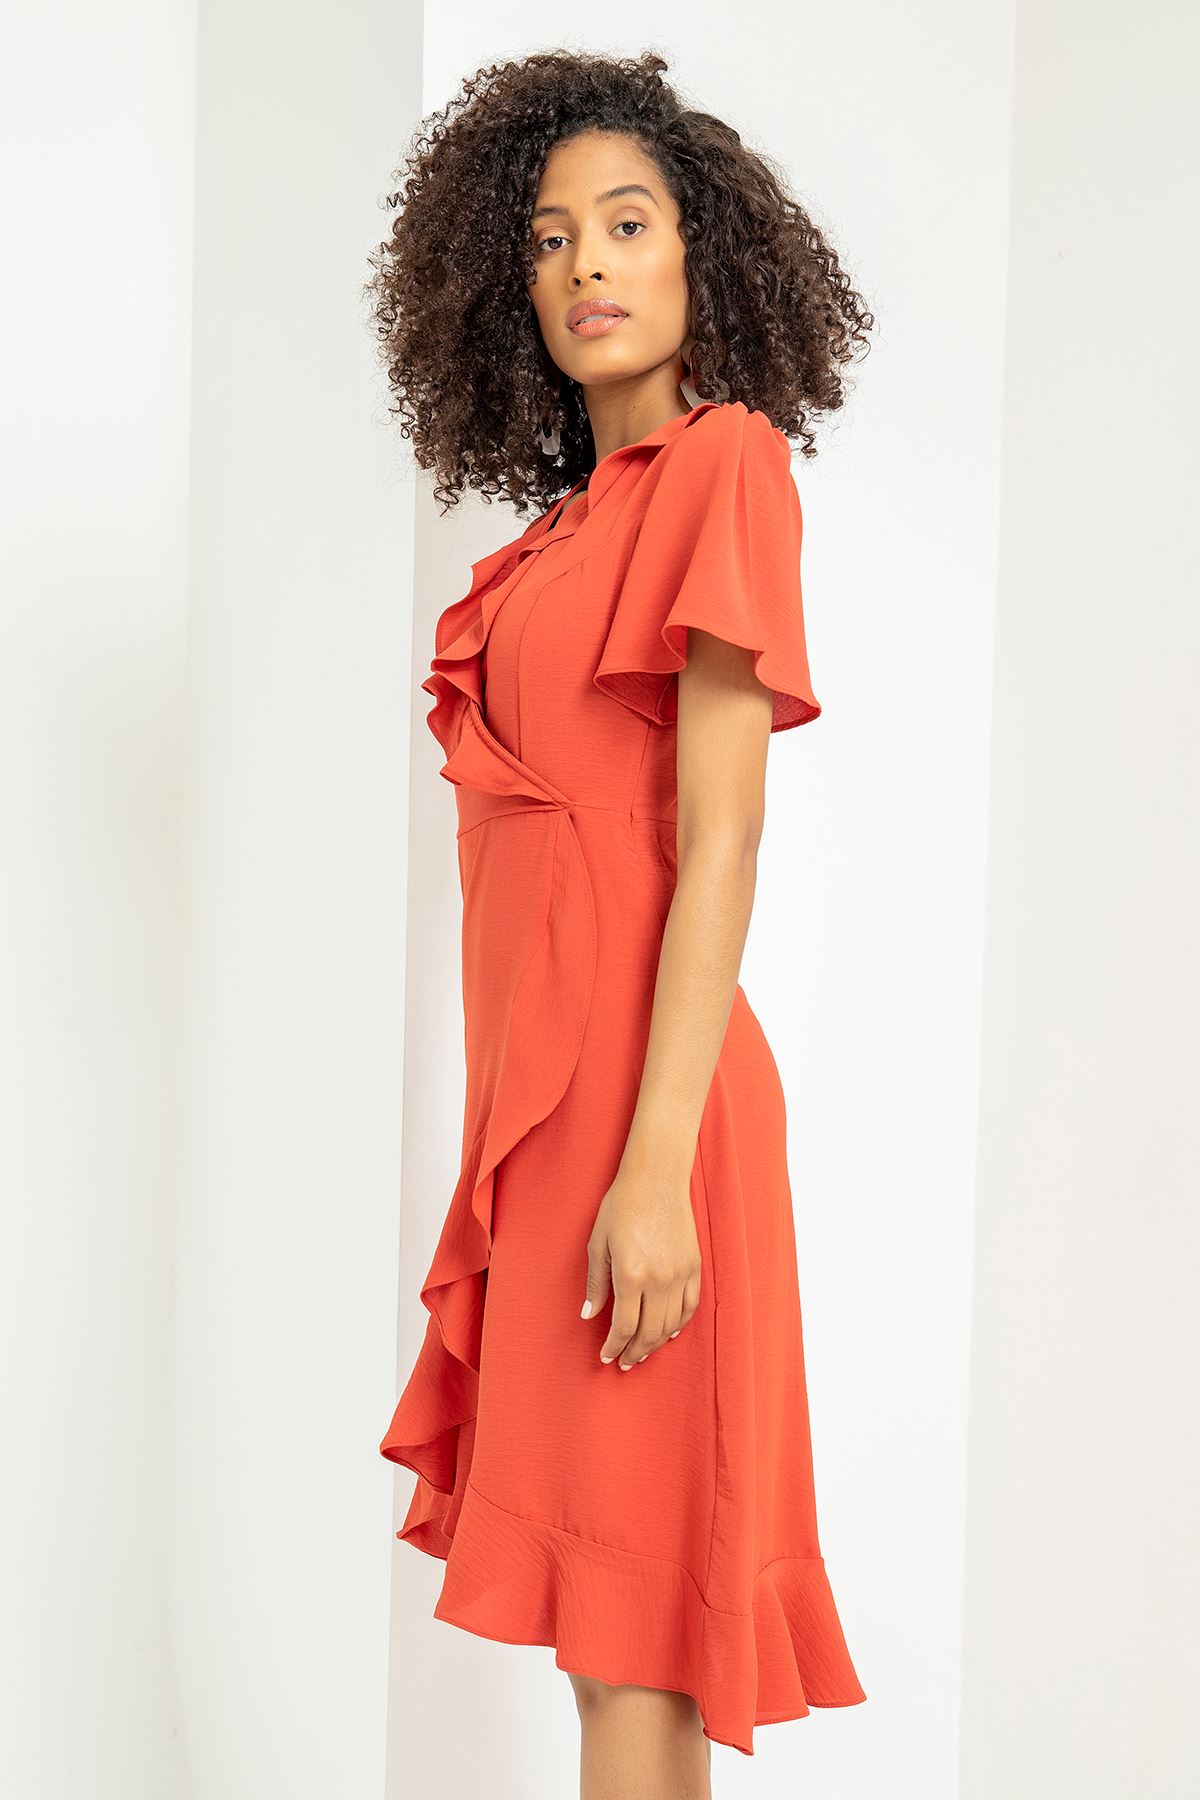 Aerobin Fabric Short Sleeve Ruffled Collar Comfy Fit Women Dress - Brick 